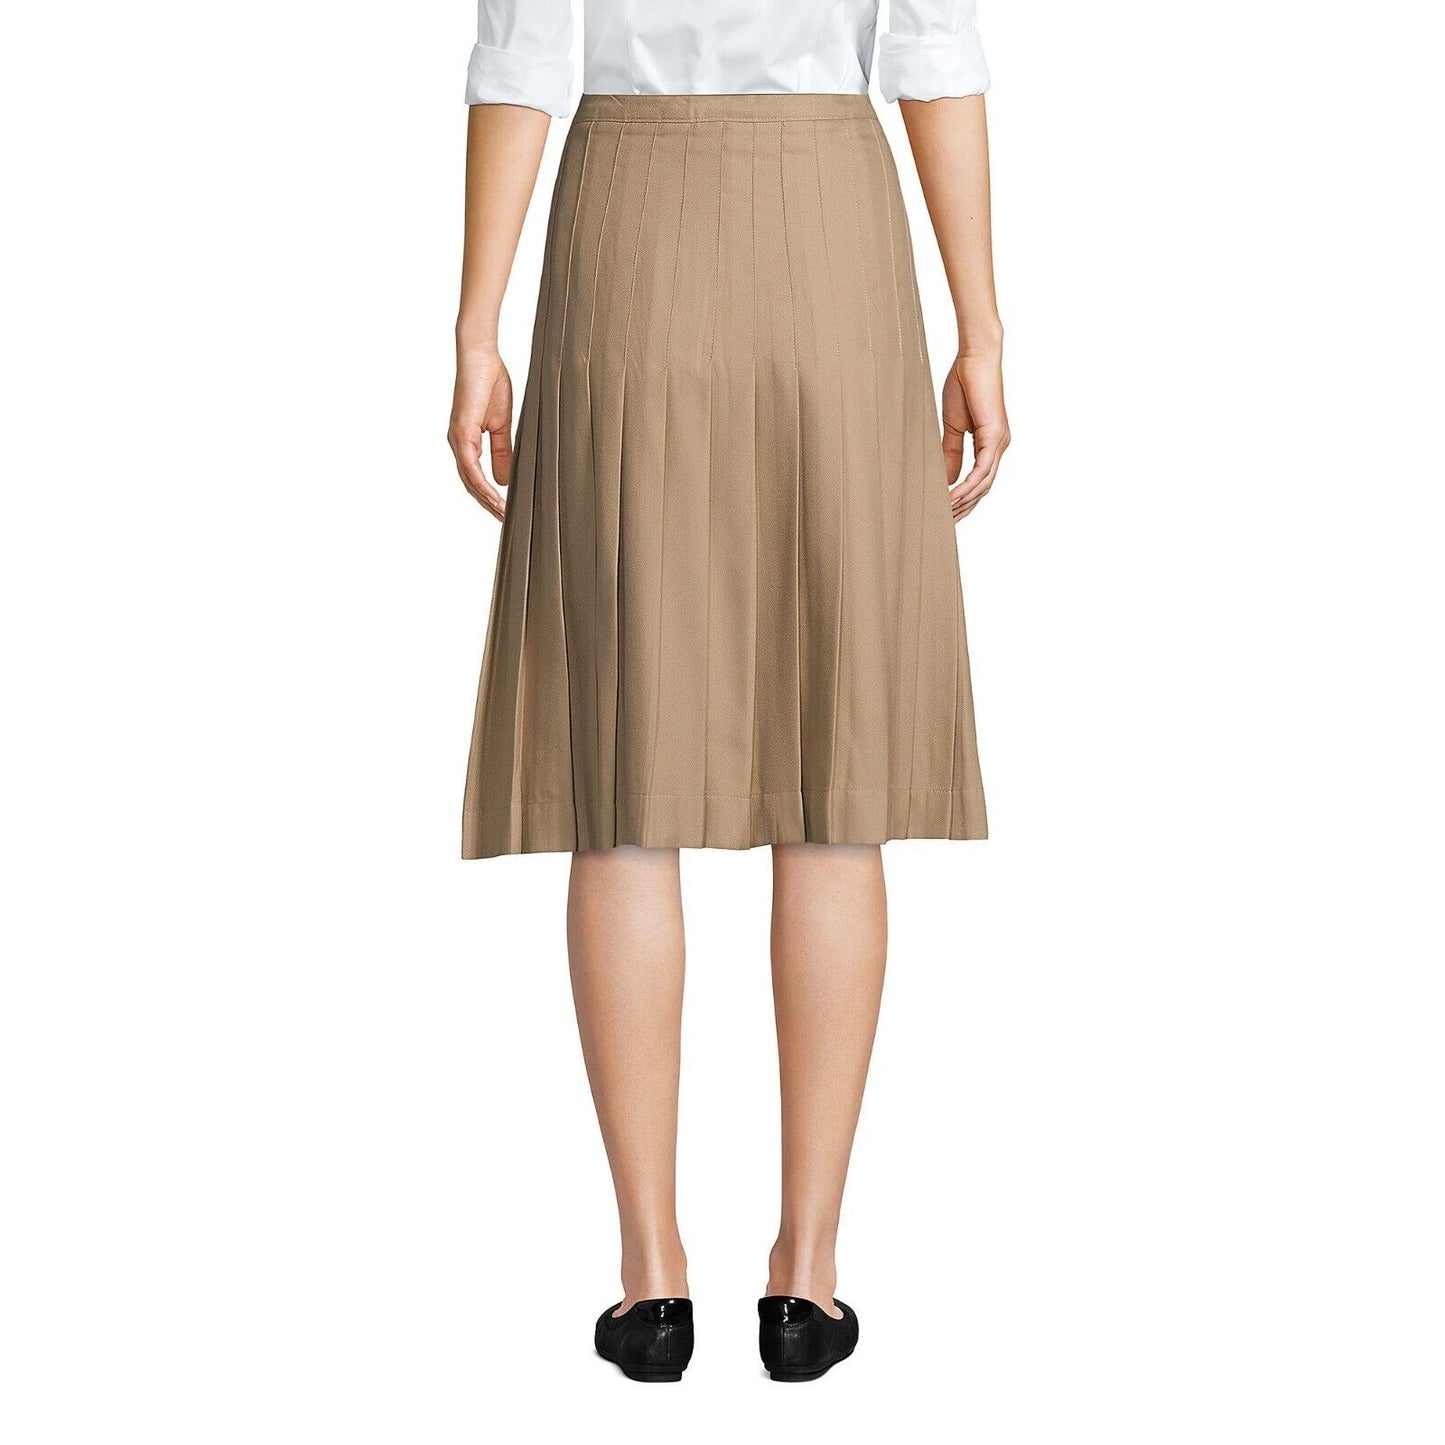 Women's Pleated Skirt Below the Knee Size 8